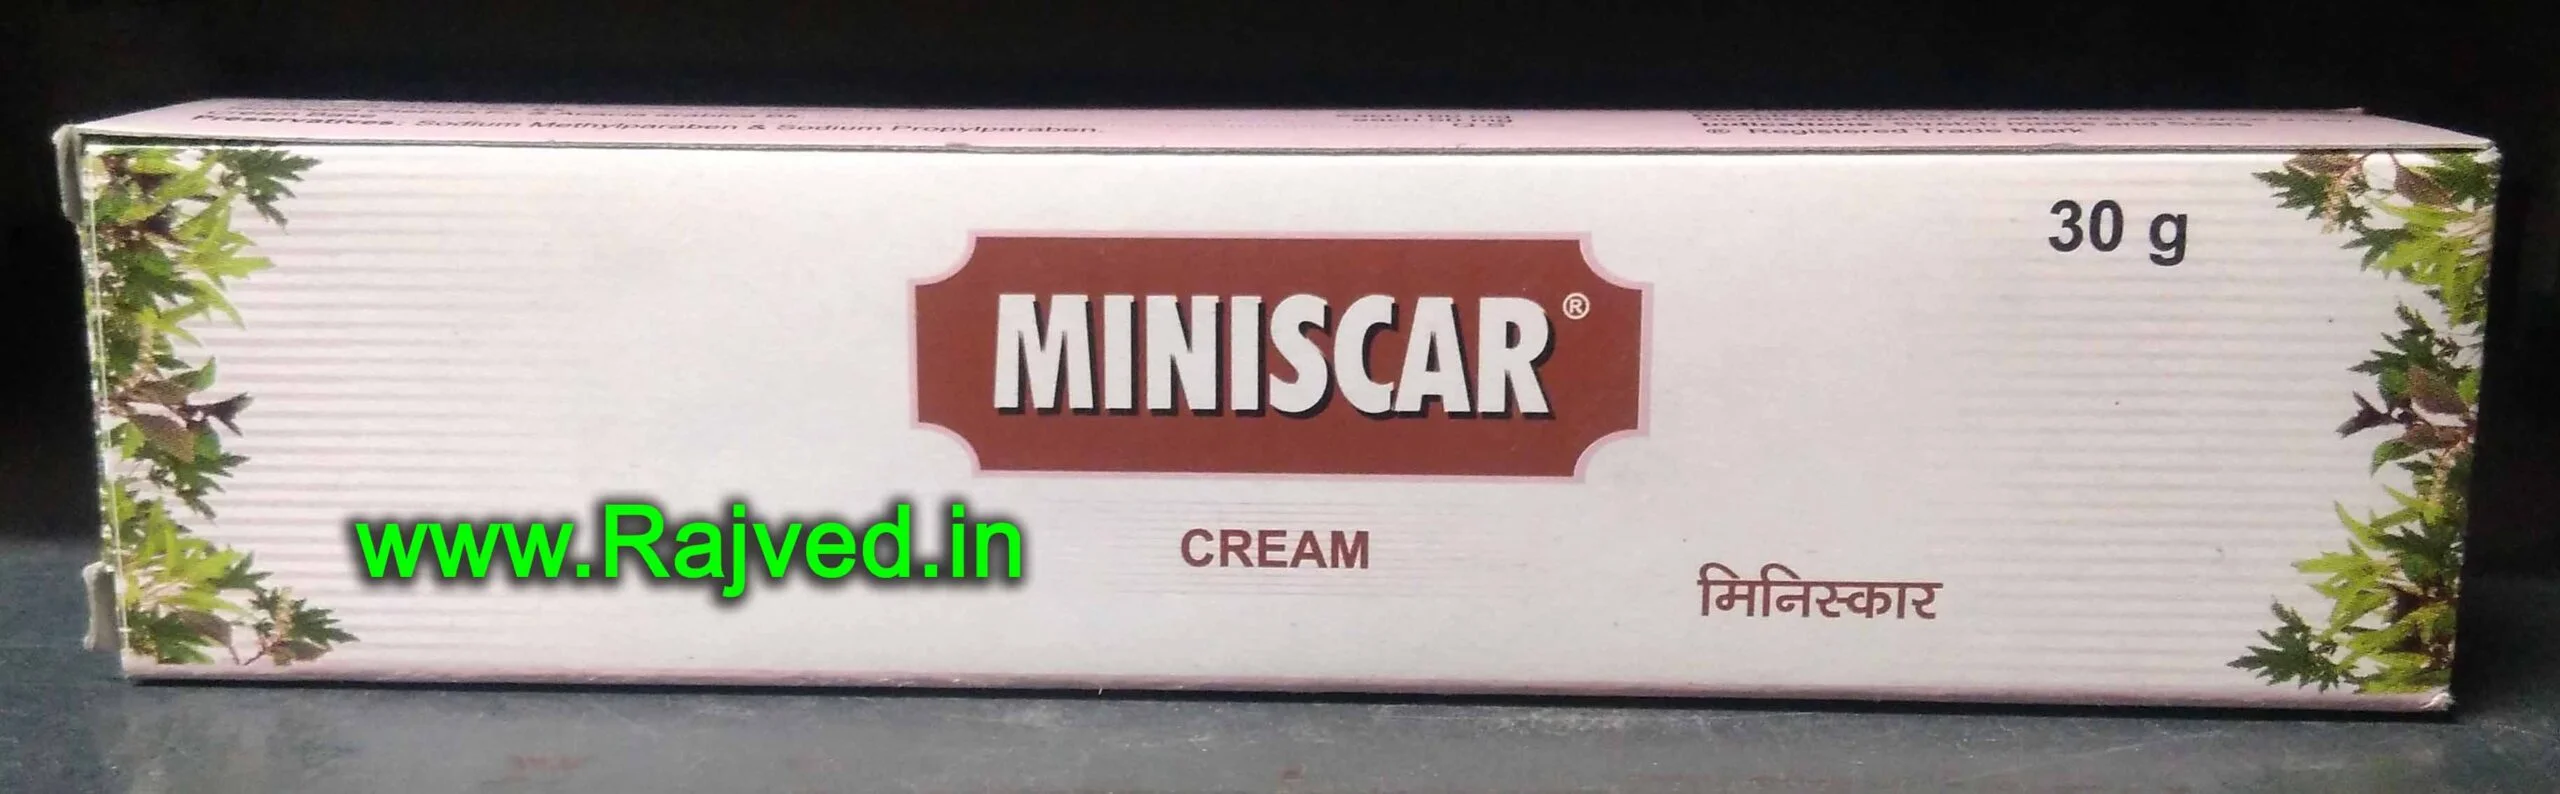 miniscar cream 30gm upto 15% off charak phytocare